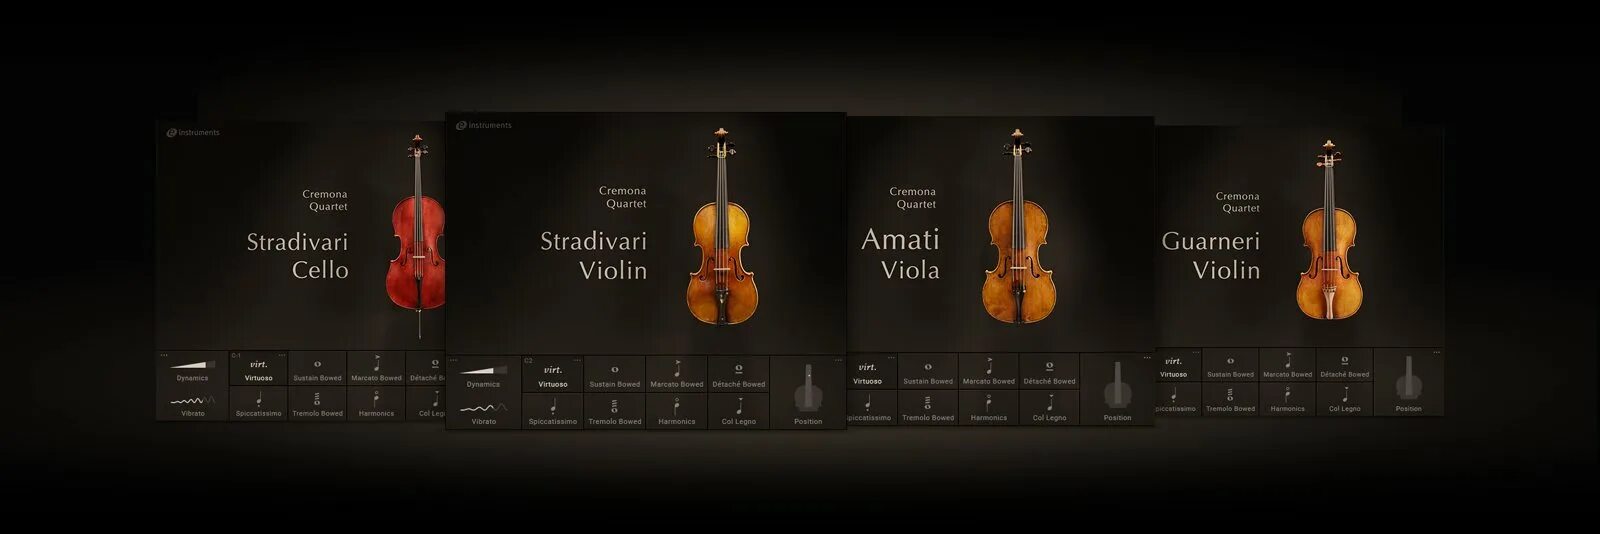 Native instruments - Cremona Quartet. Stradivari Violin Kontakt. Ni Cremona Quartet. Кремона Страдивари. Violin kontakt